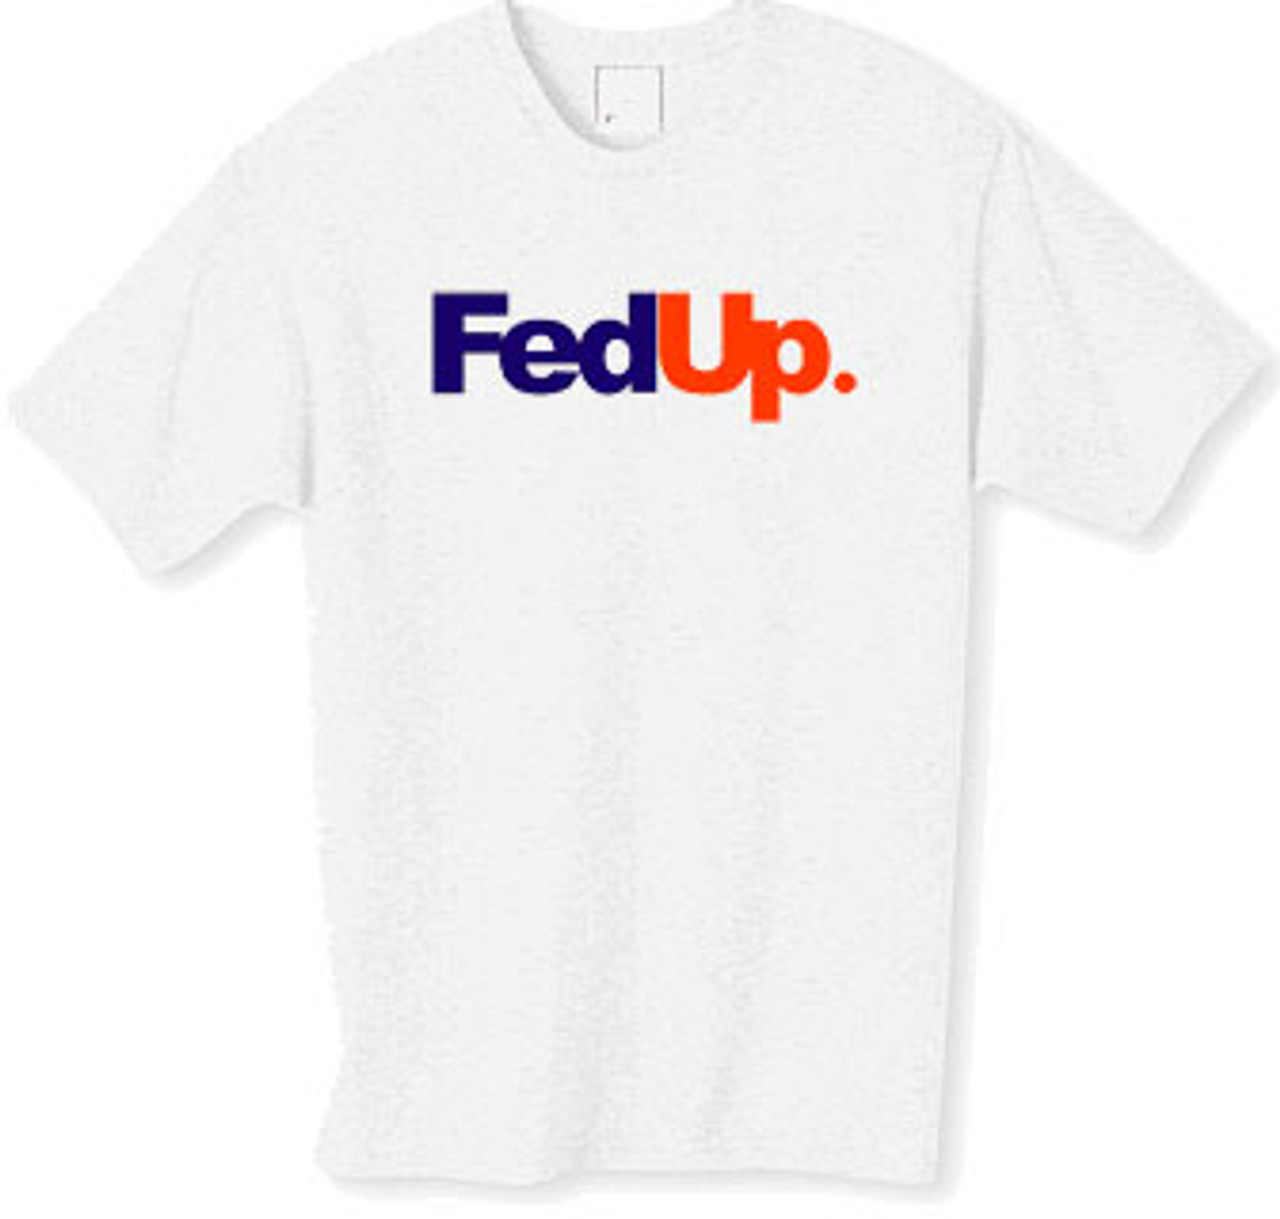 Fed up t shirt